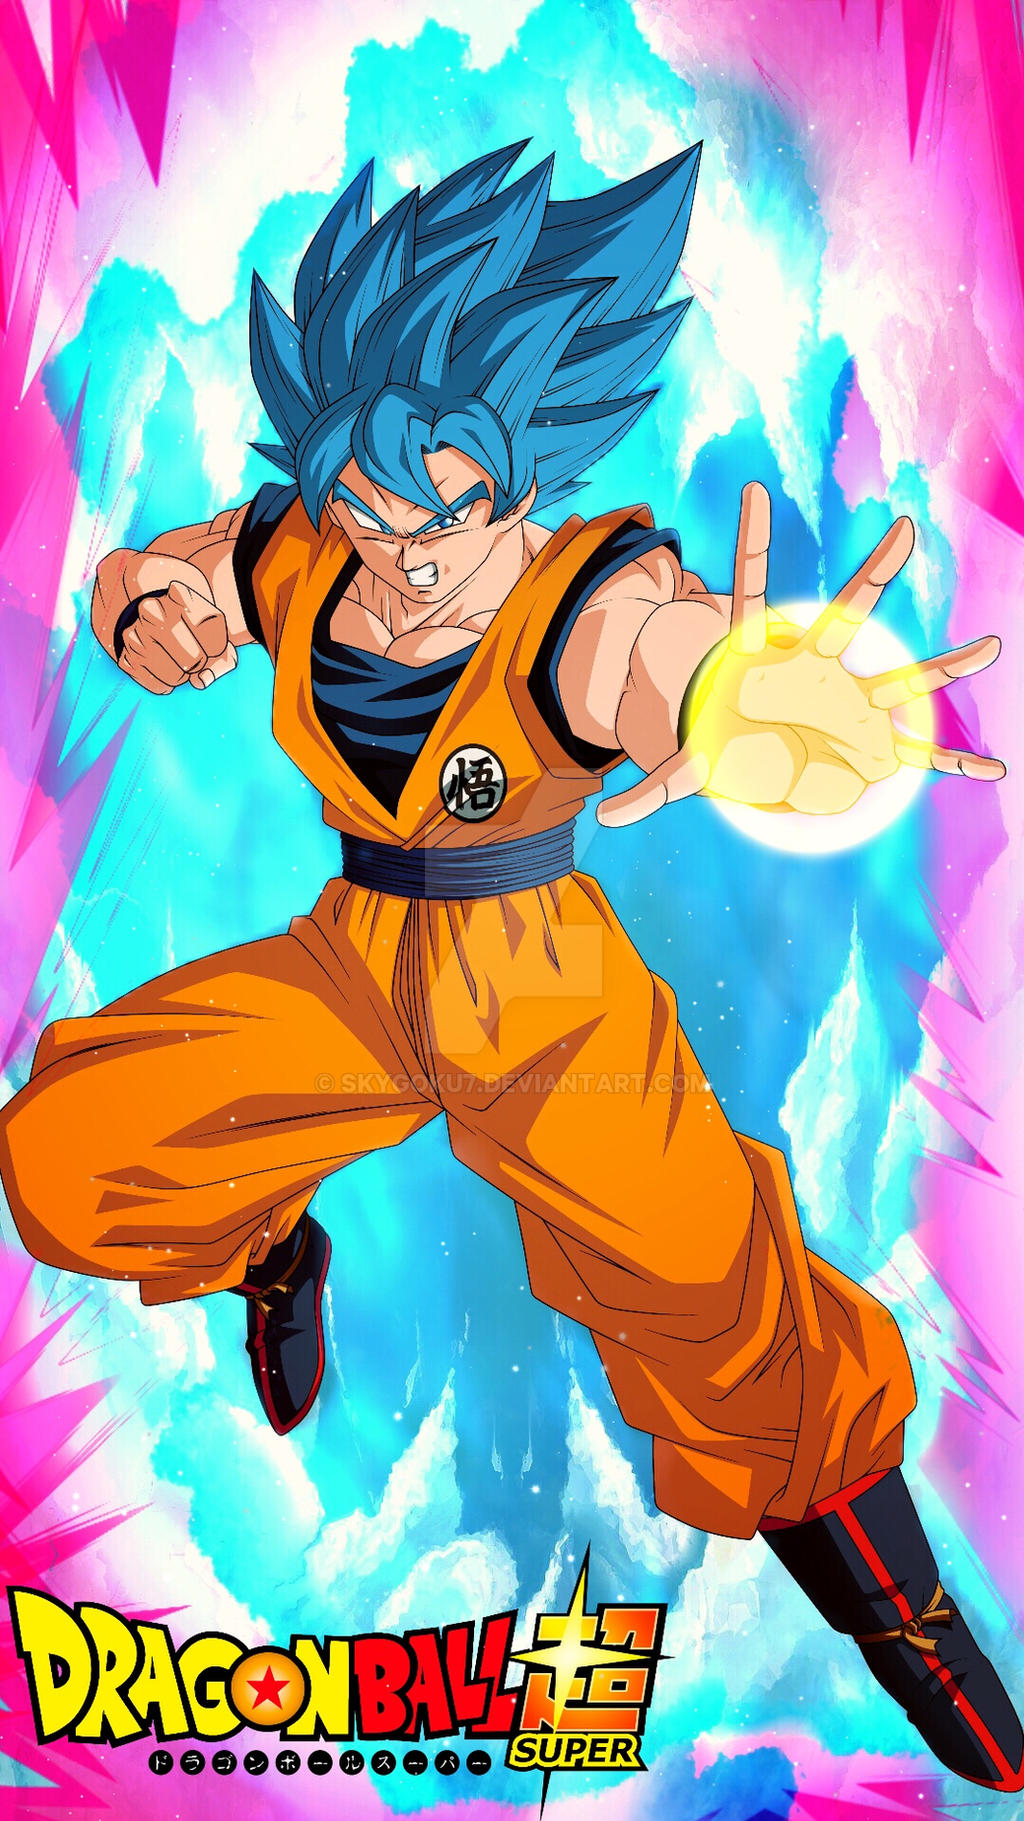 Goku super saiyan Blue kaioken by BardockSonic on DeviantArt